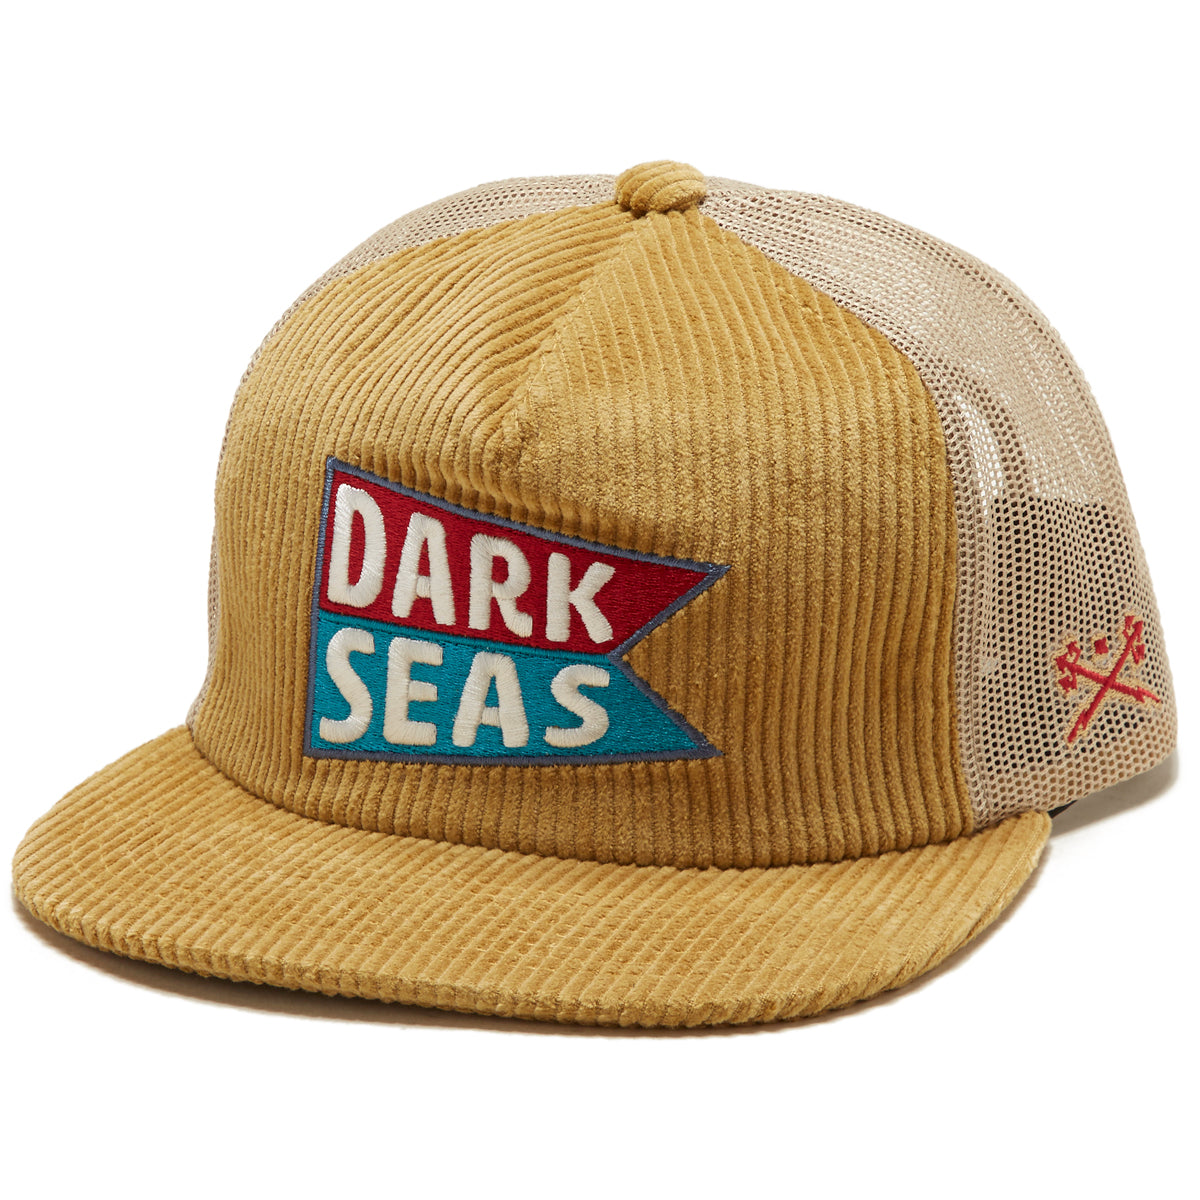 Dark Seas Semaphore Hat - Gold image 1